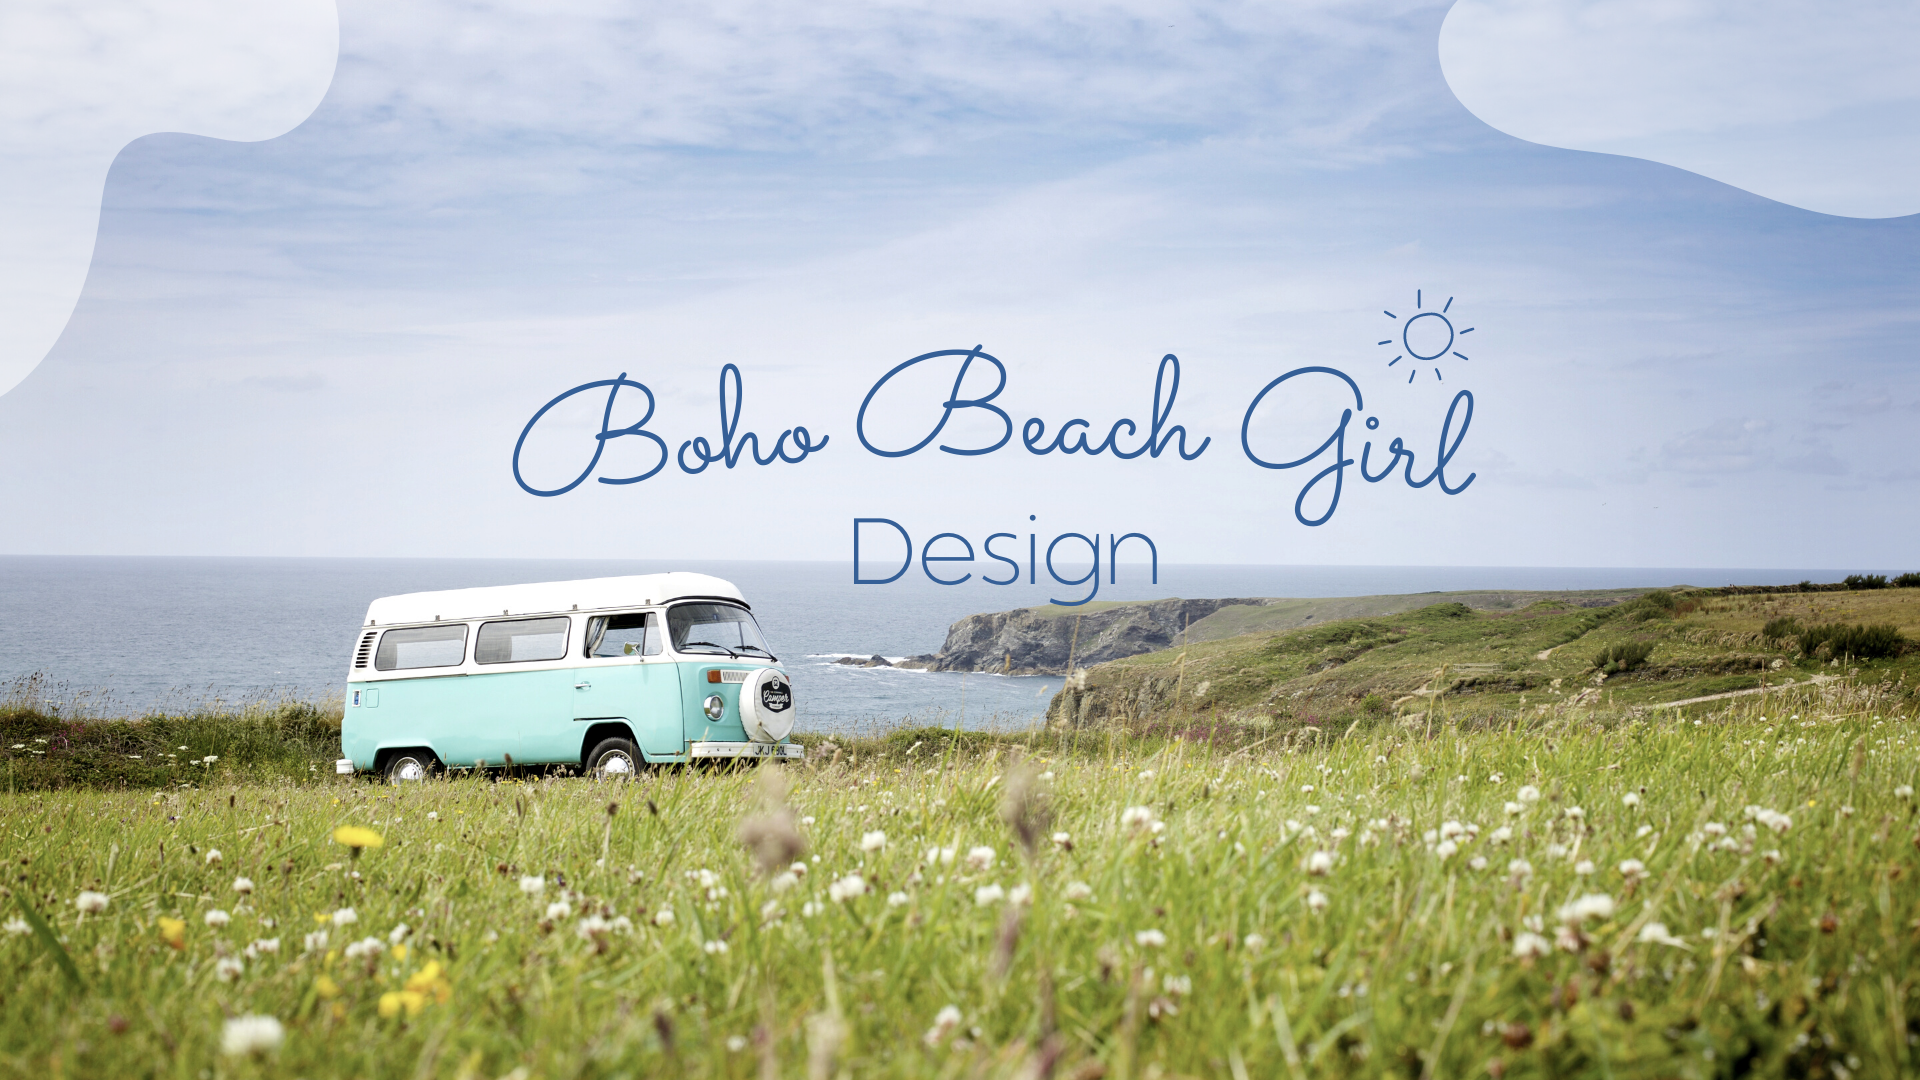 Boho Beach Girl Design soft blue and white colored VW van on a grassy hillside overlooking the ocean